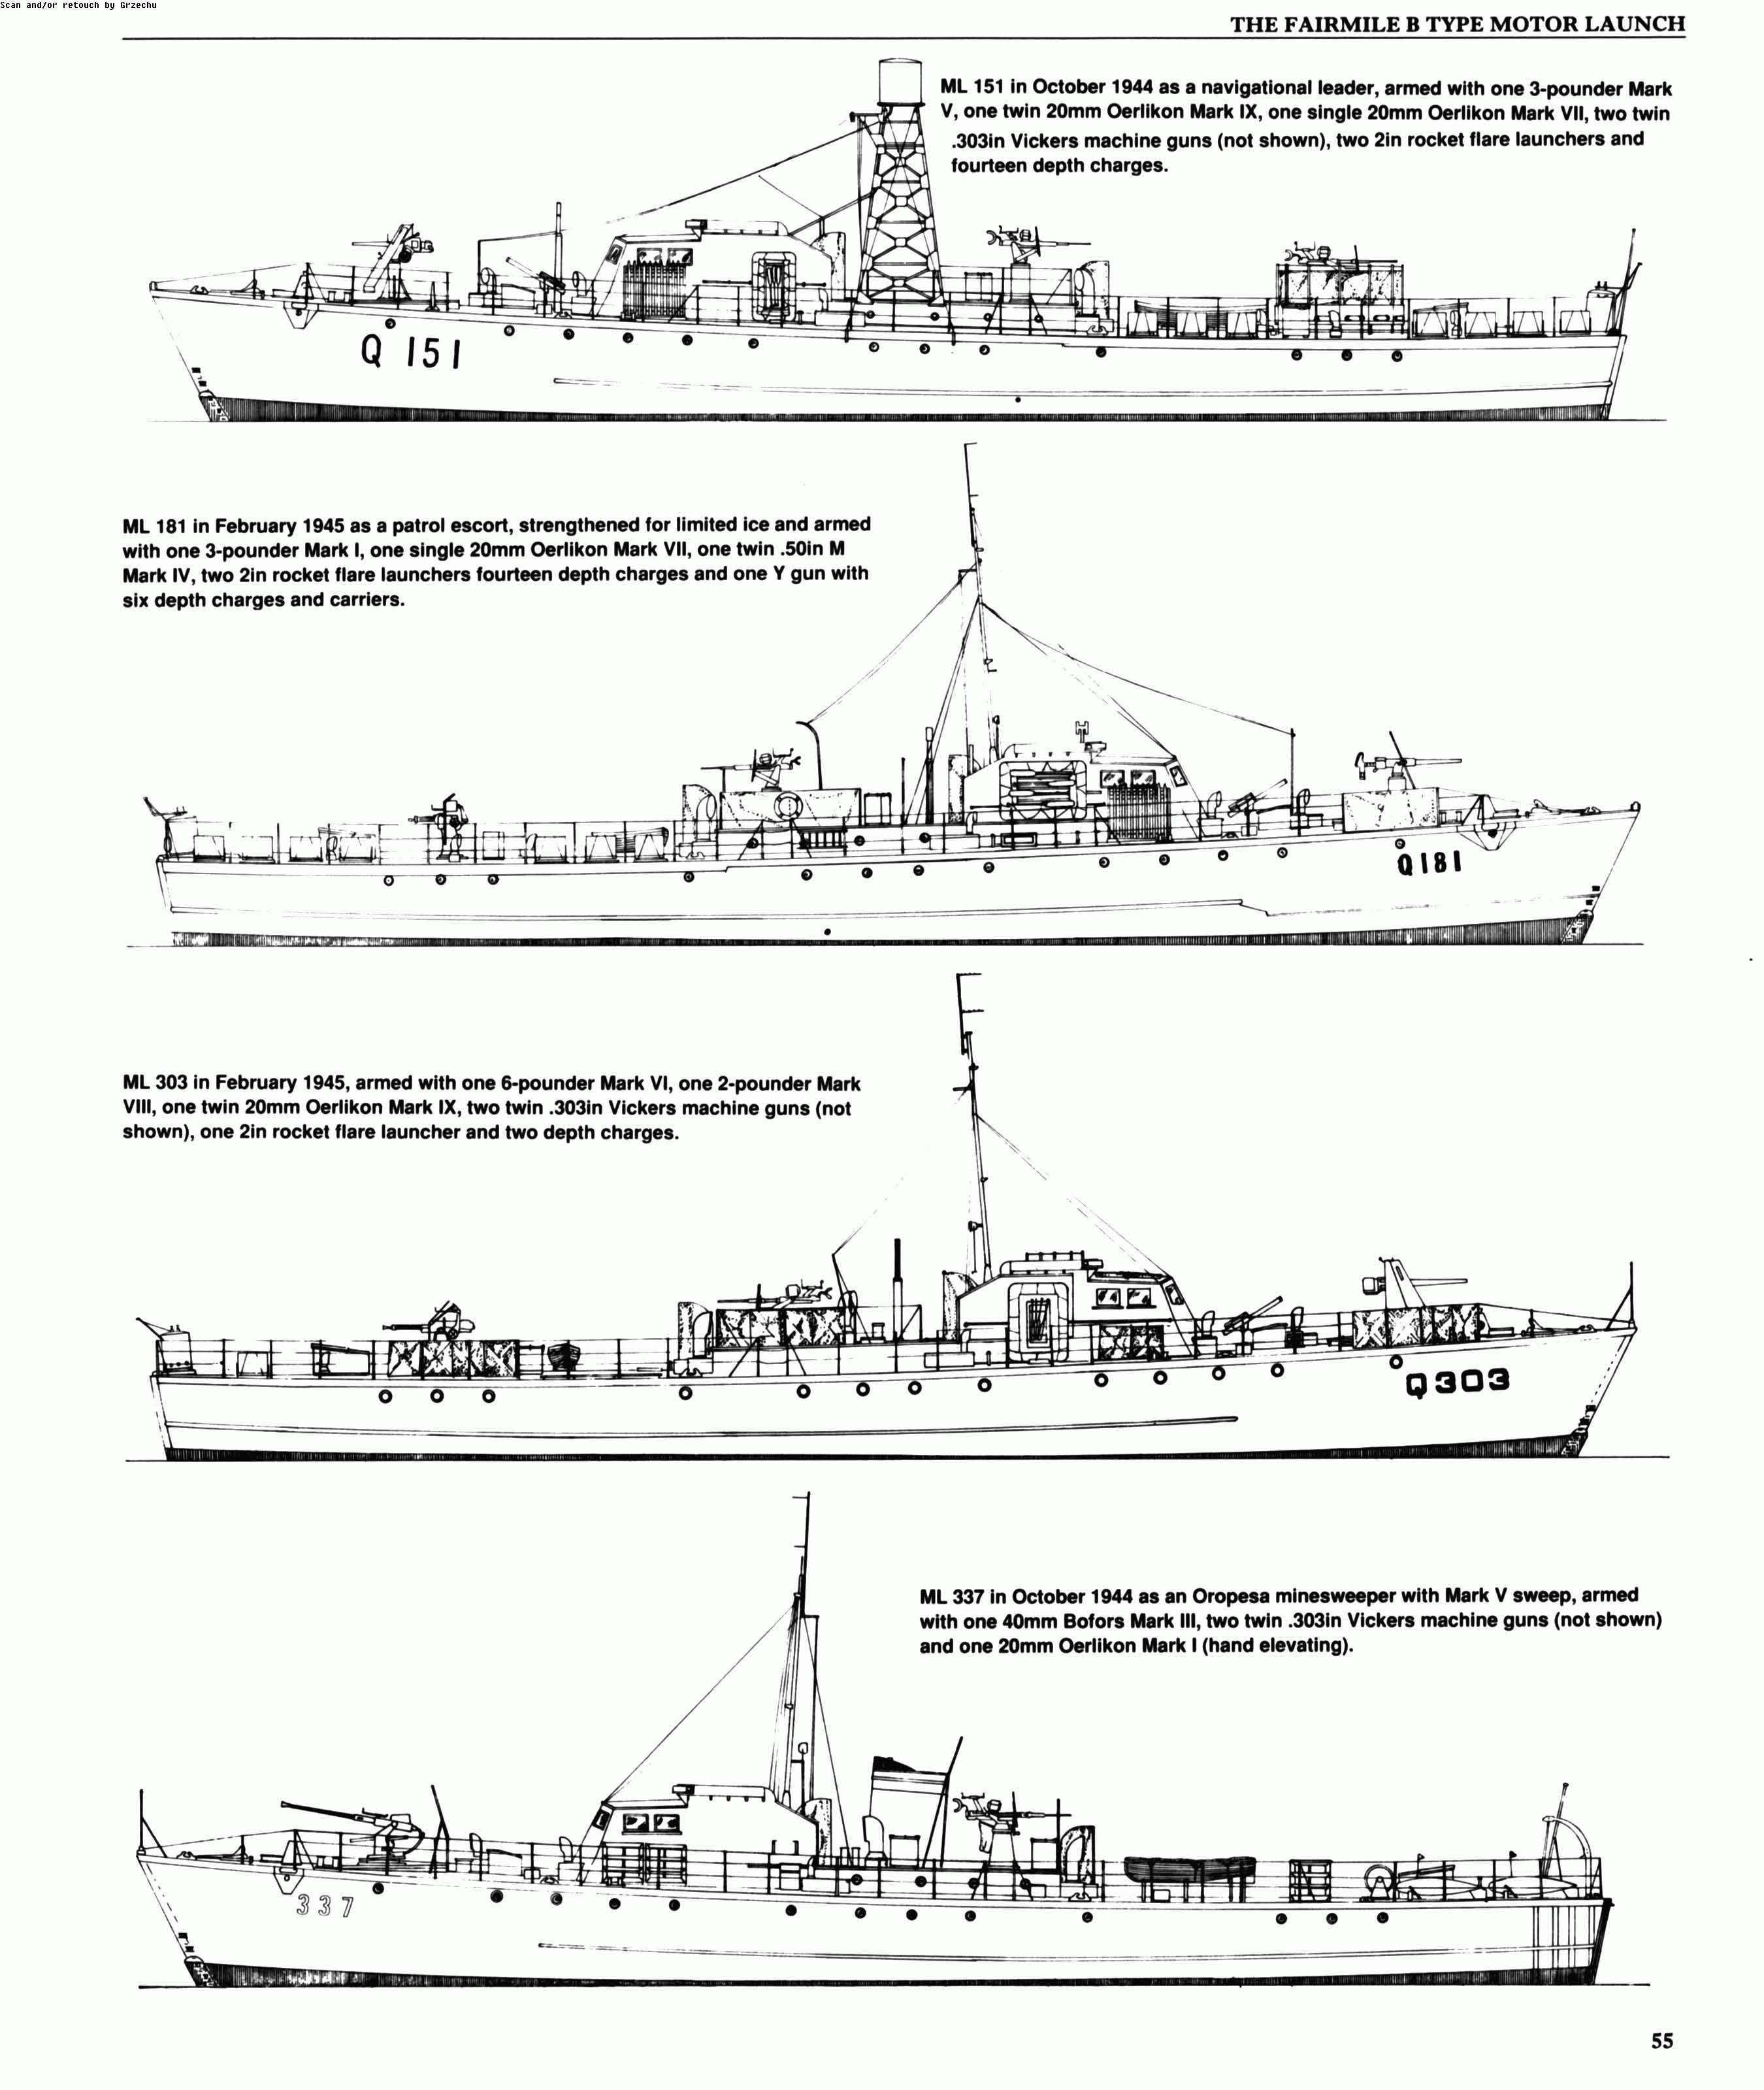 Allied Coastal Forces of World War II (1) Fairmile designs & U.S. submarine chasers_Page_057.jpg